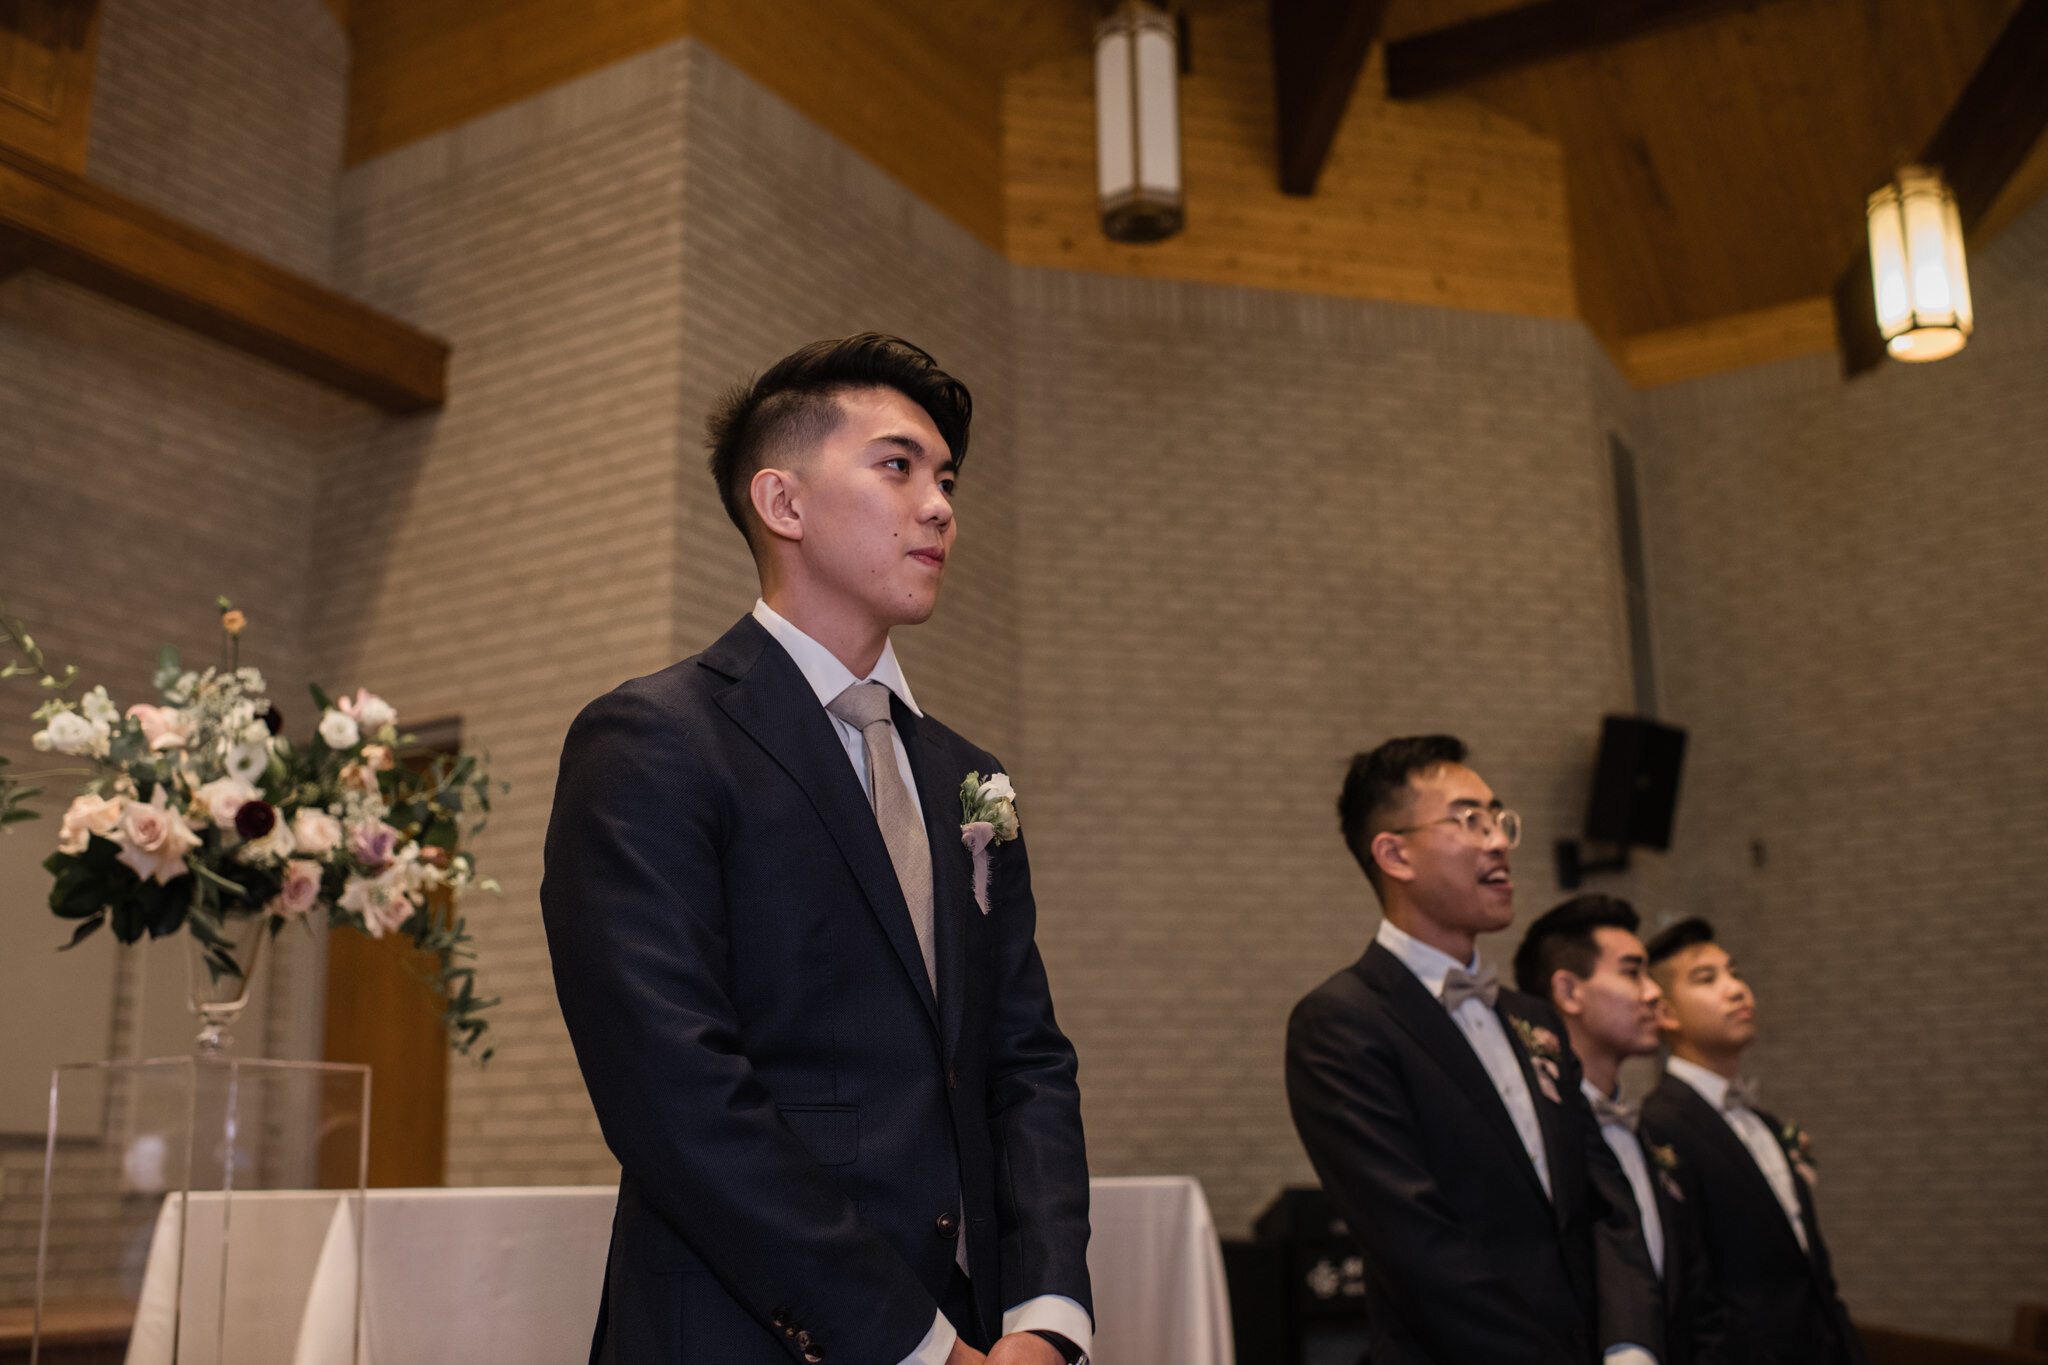 170-father-bride-aisle-wedding-ceremony-photos-toronto-church-emotional-brewery-reception.jpg